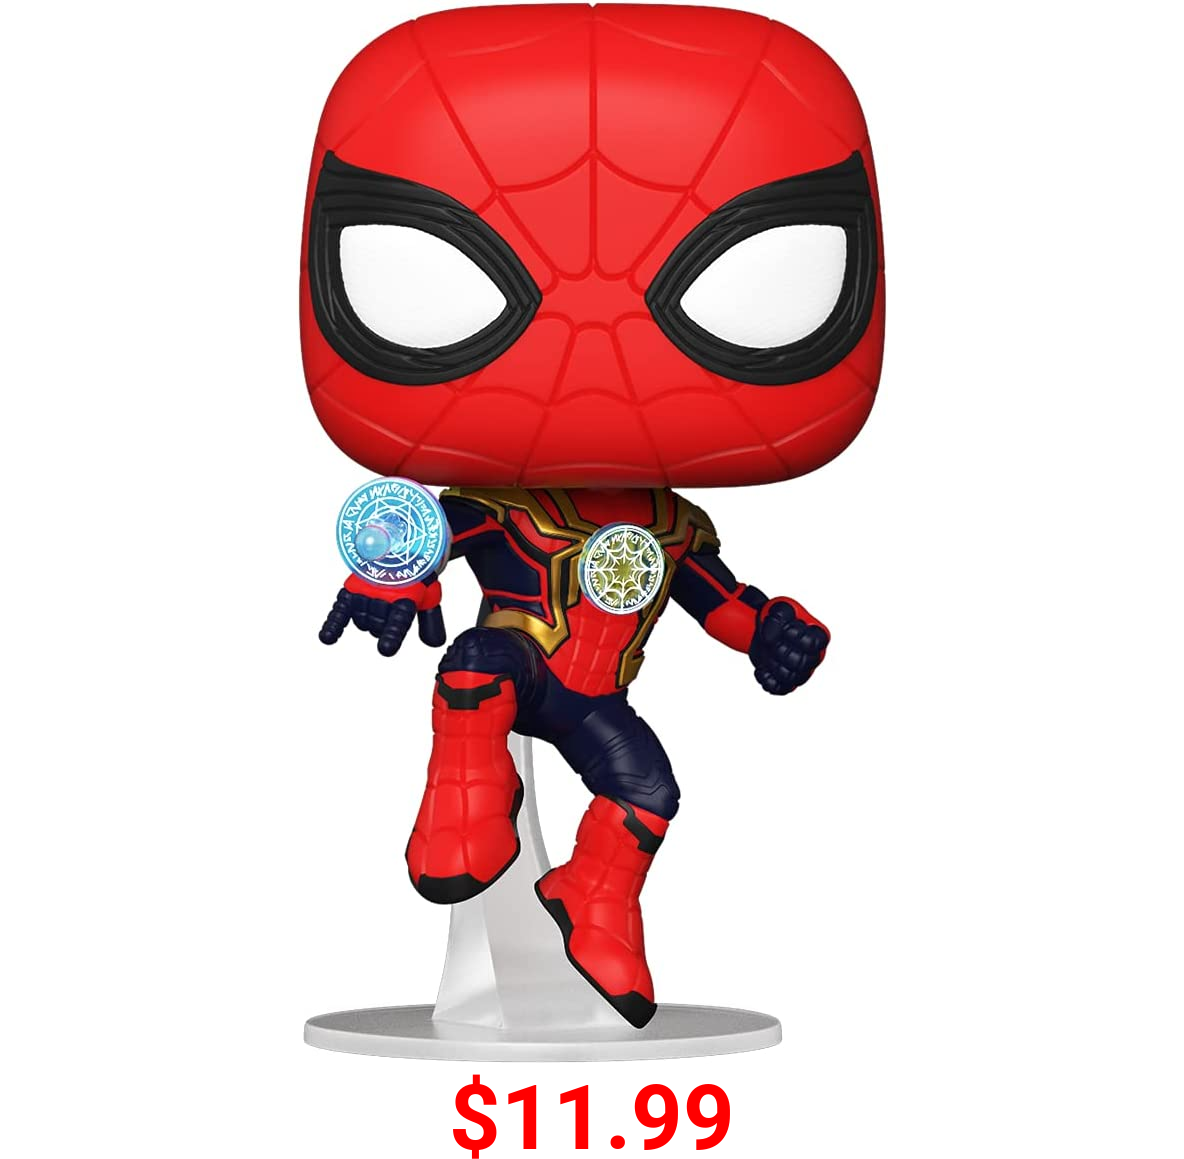 Funko Pop! Marvel: Spider-Man: No Way Home - Spider-Man in Integrated Suit